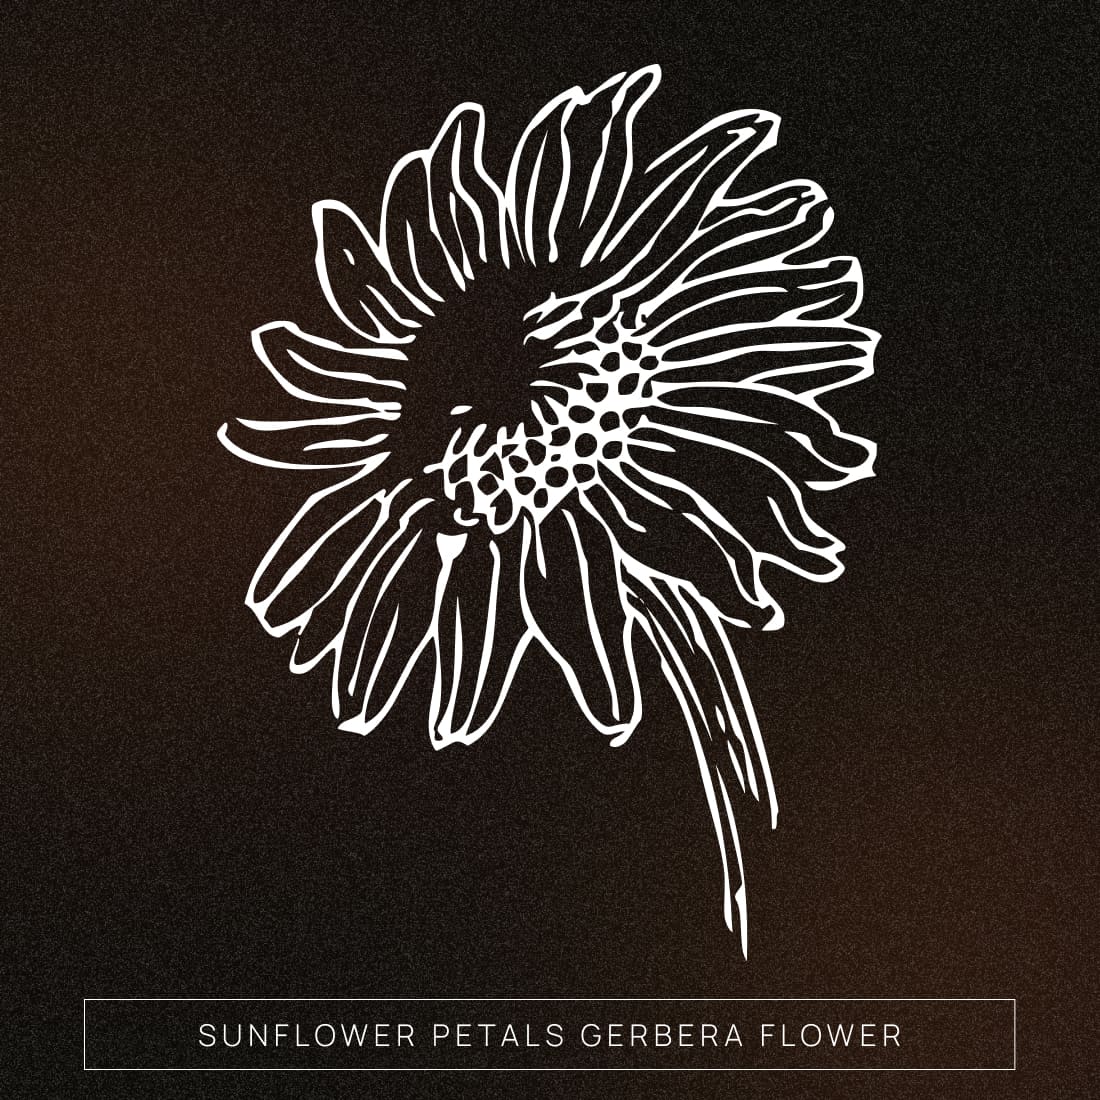 sunflower petals gerbera flower cover image.